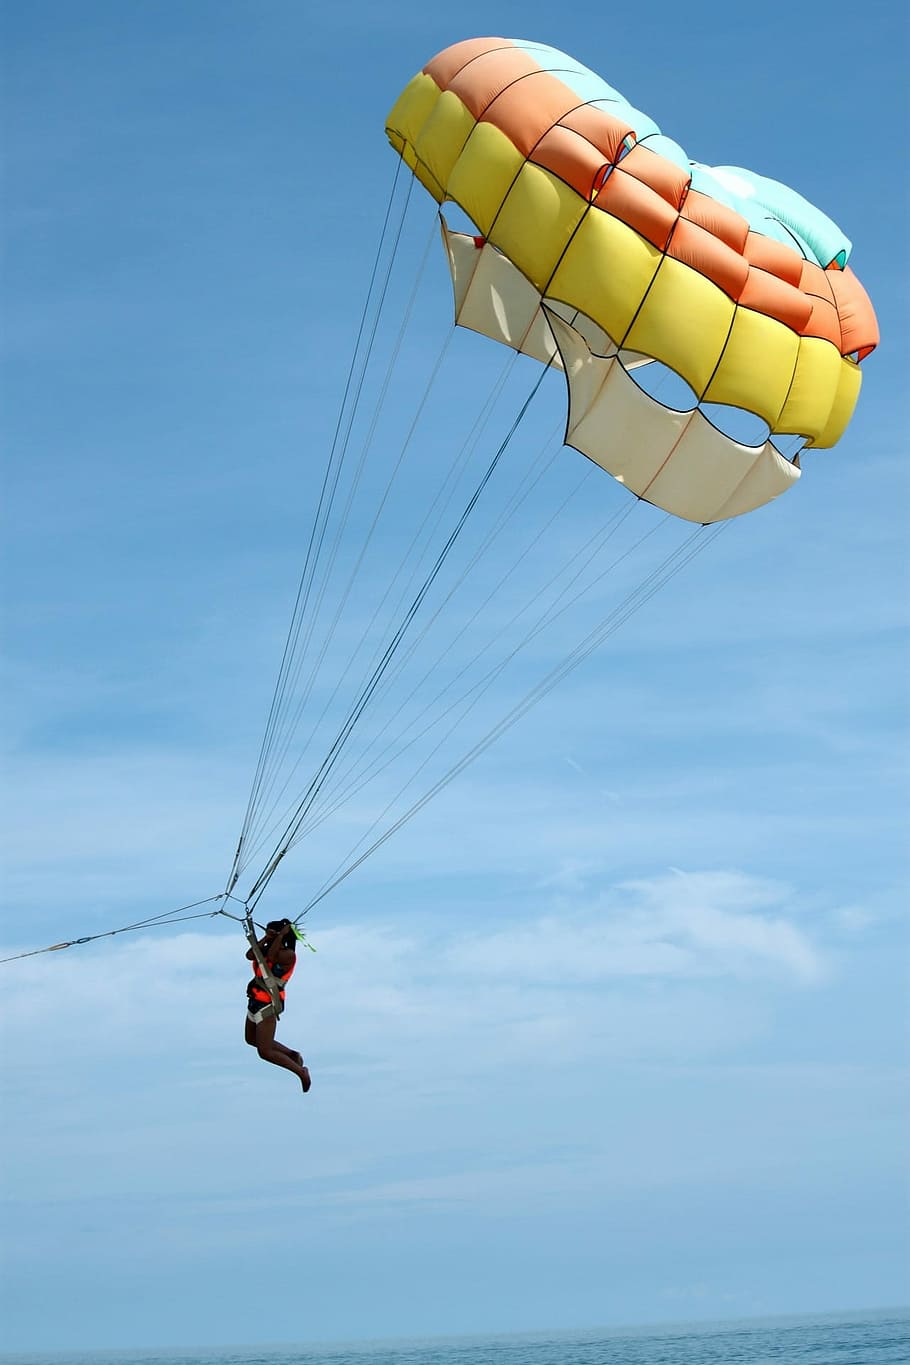 parasailing, controllable parachuting, Parasailing, Controllable, Parachuting, controllable parachuting, parachute, fly, bird's eye view, paragliding, hang gliding